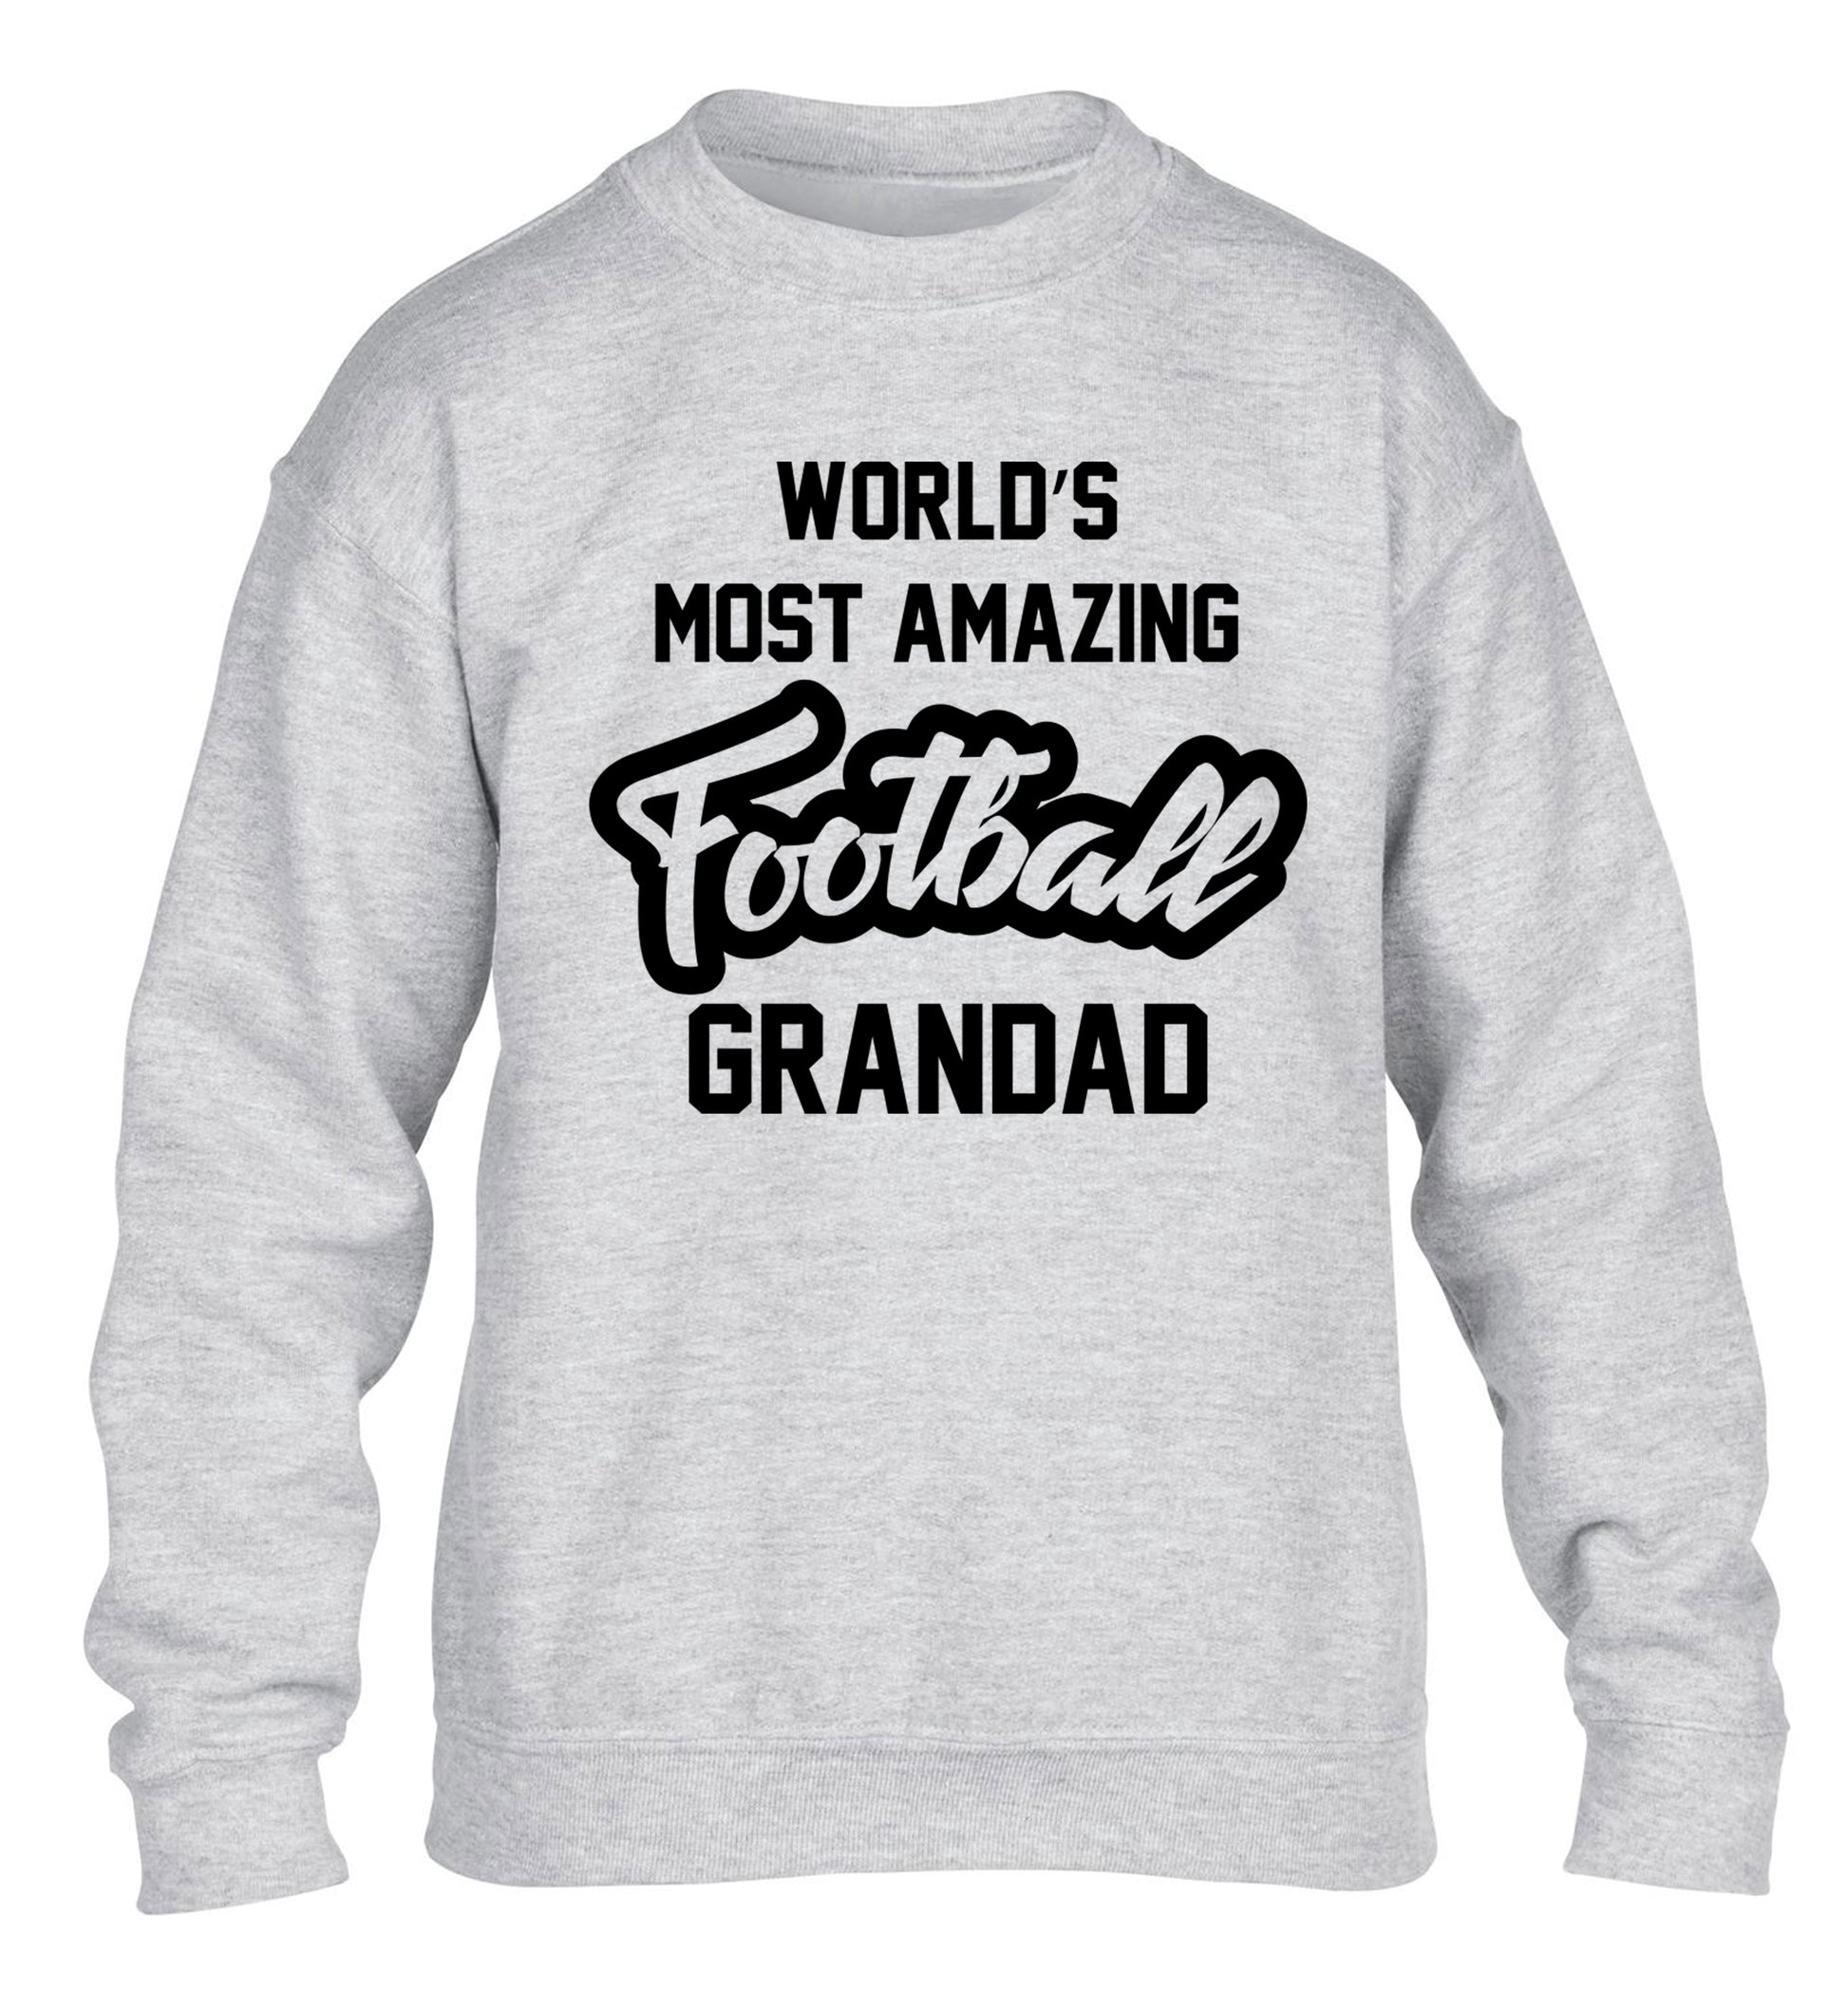 Worlds most amazing football grandad children's grey sweater 12-14 Years